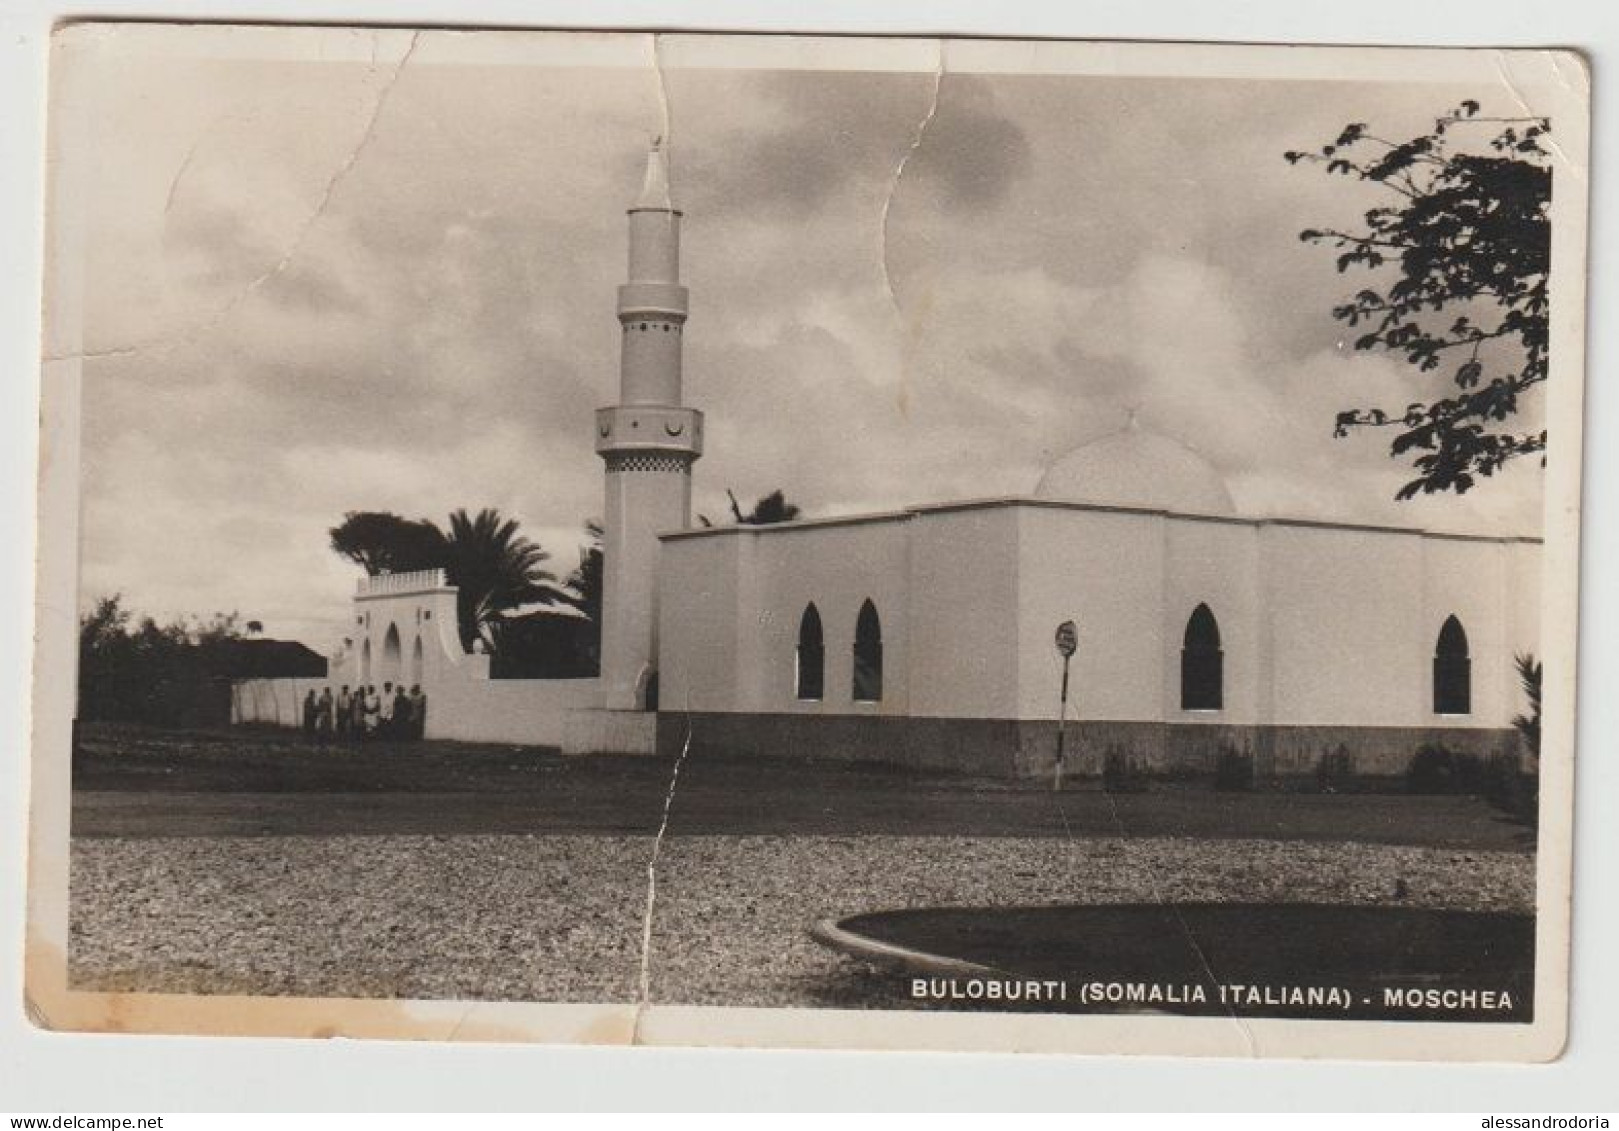 Cartolina Viaggiata Affrancata Francobollo Rimosso Buloburti Bulo Burti Somalia Italiana Moschea 1950 - Somalie